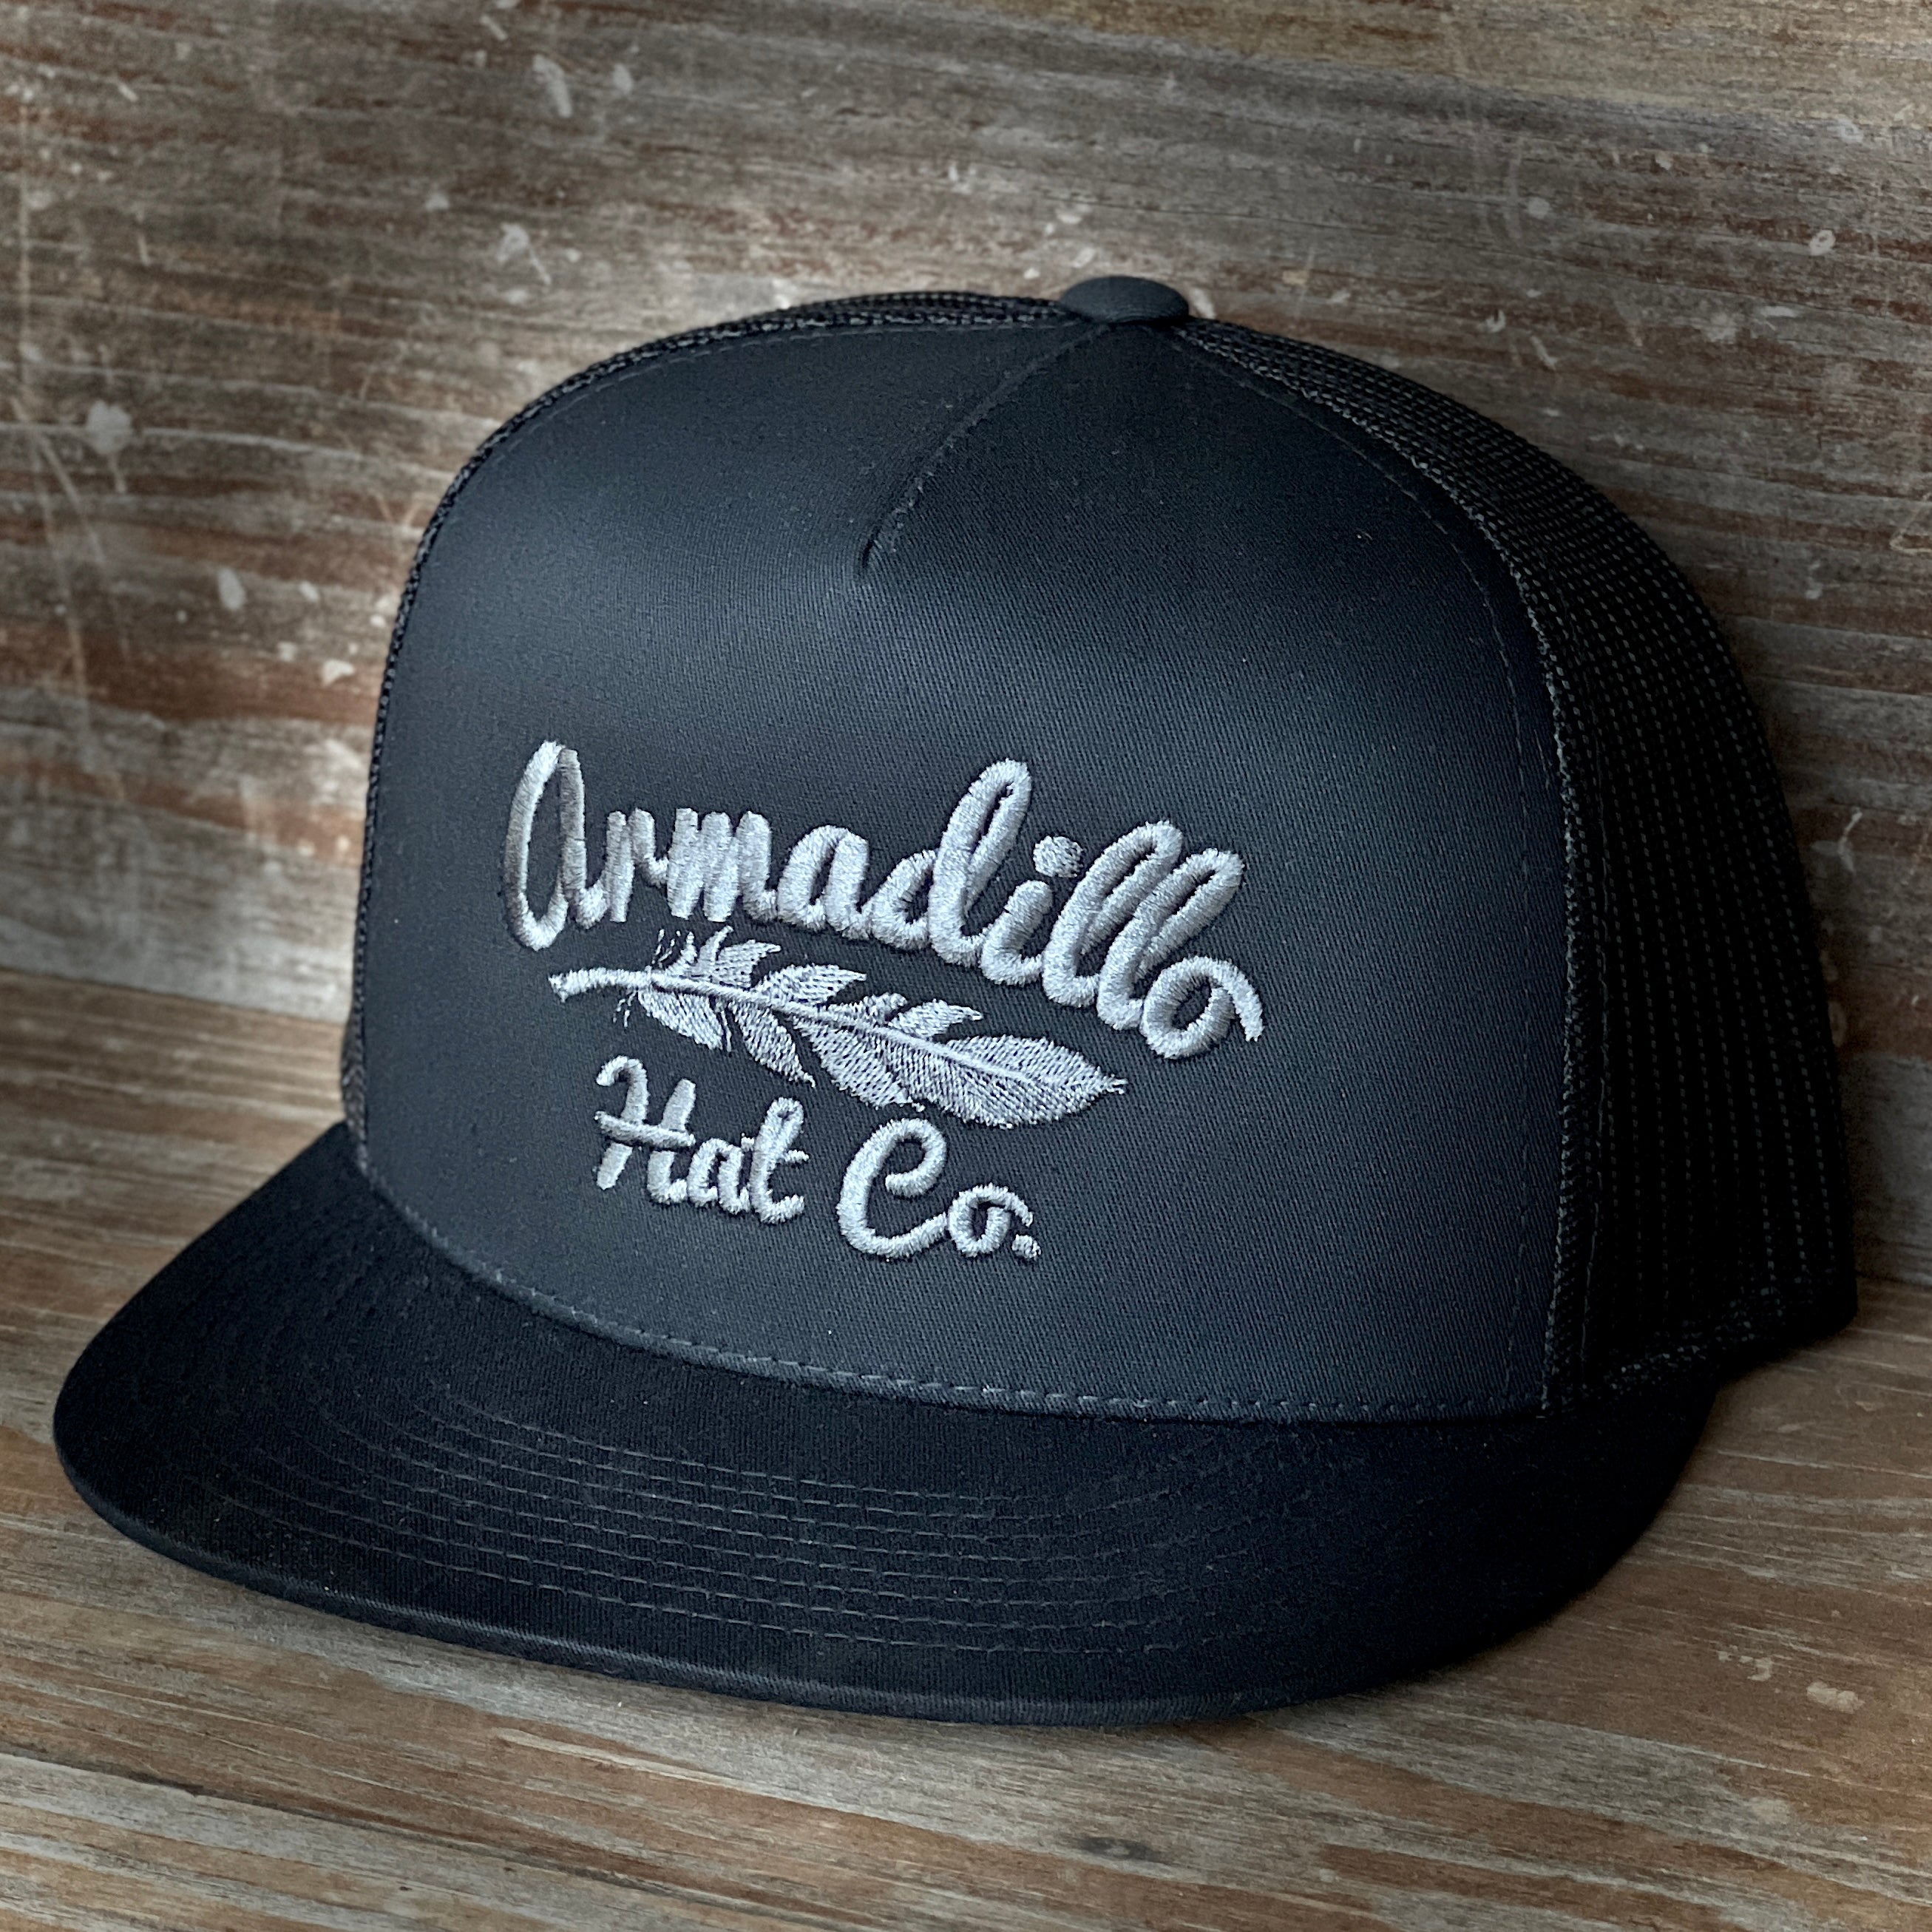 Renegade – Armadillo Hat Co.